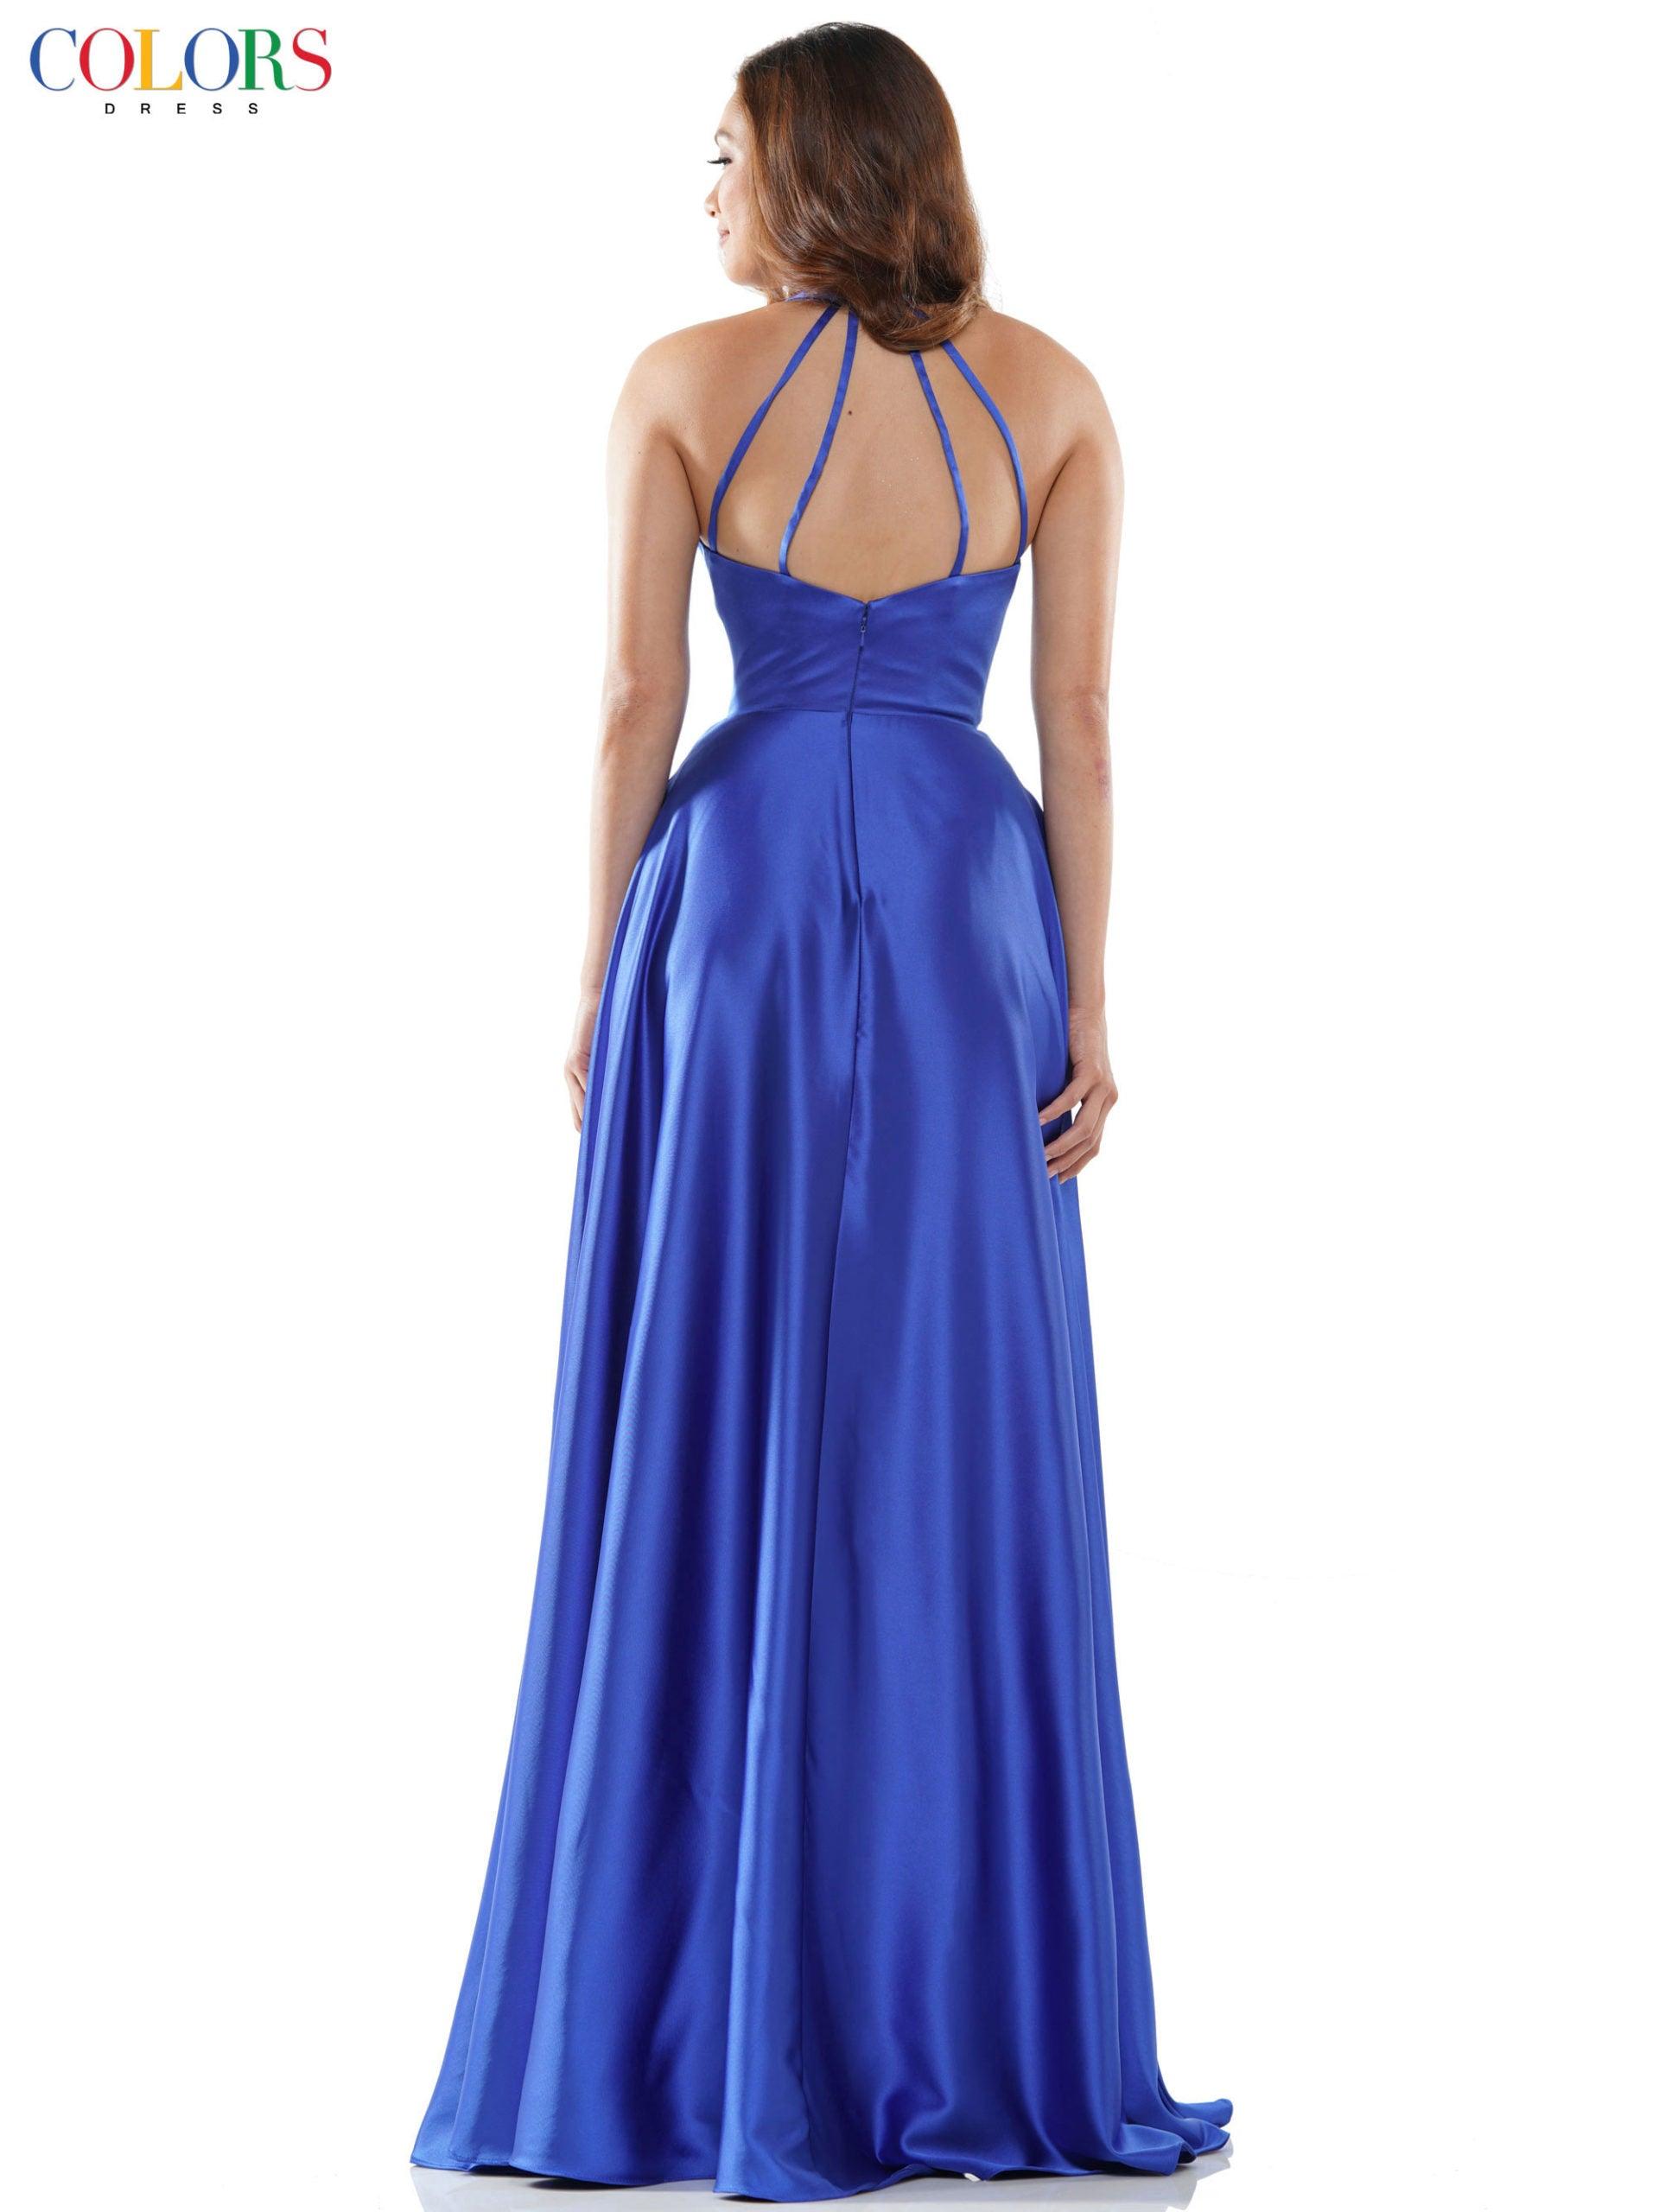 Colors Long Halter Formal Prom Dress 2633 - The Dress Outlet